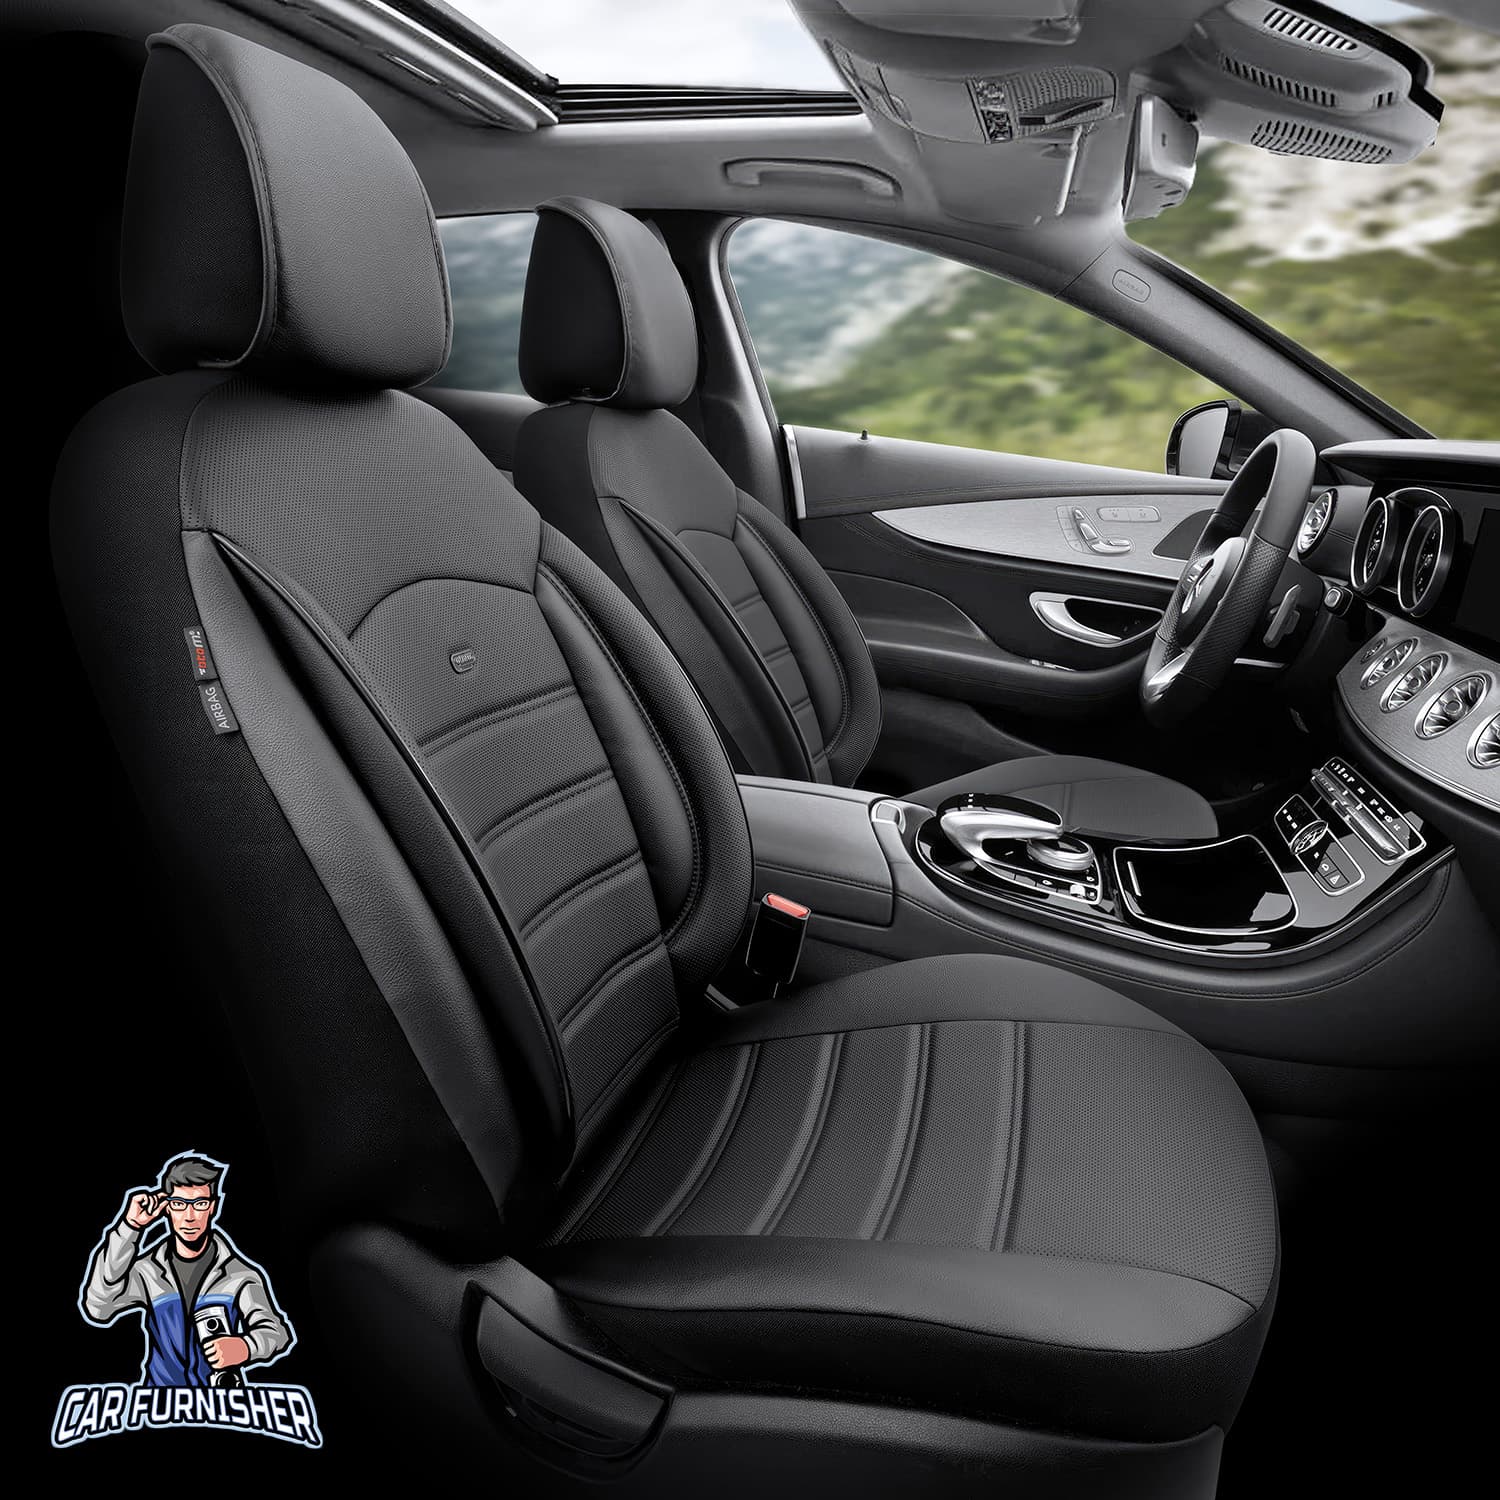 Mercedes 190 Seat Covers Inspire Design Black 5 Seats + Headrests (Full Set) Full Leather